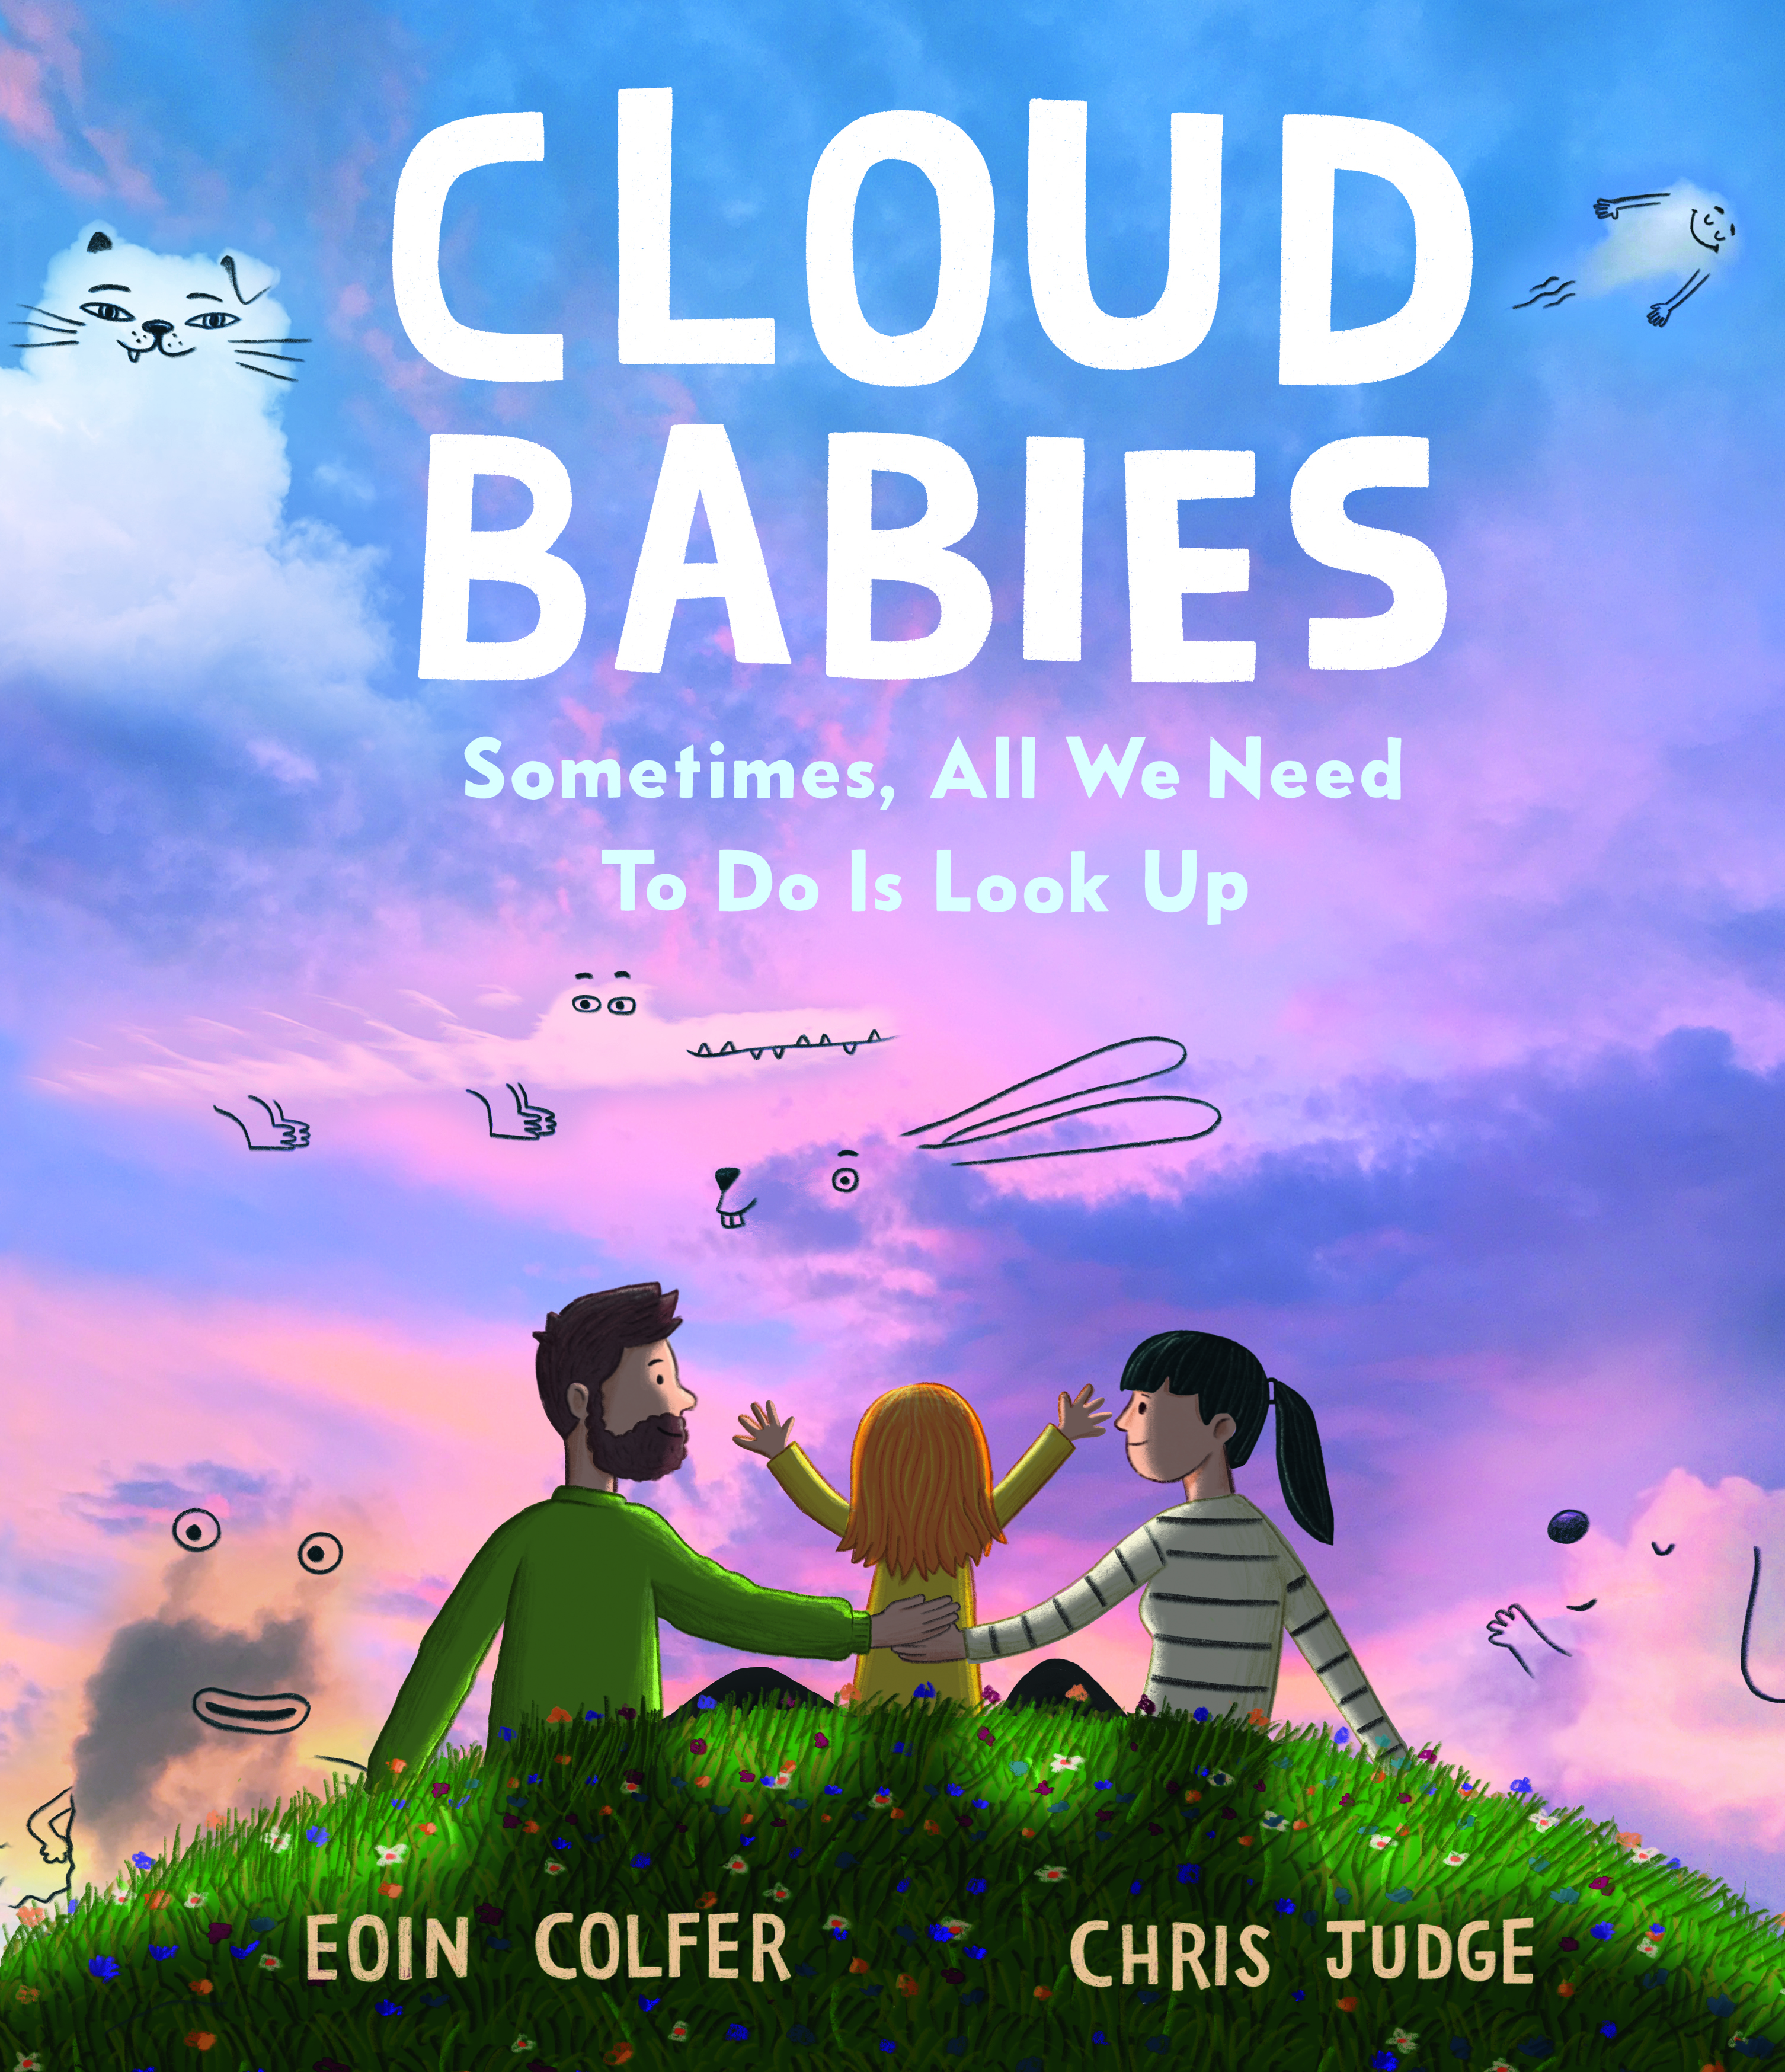 Cloud-Babies